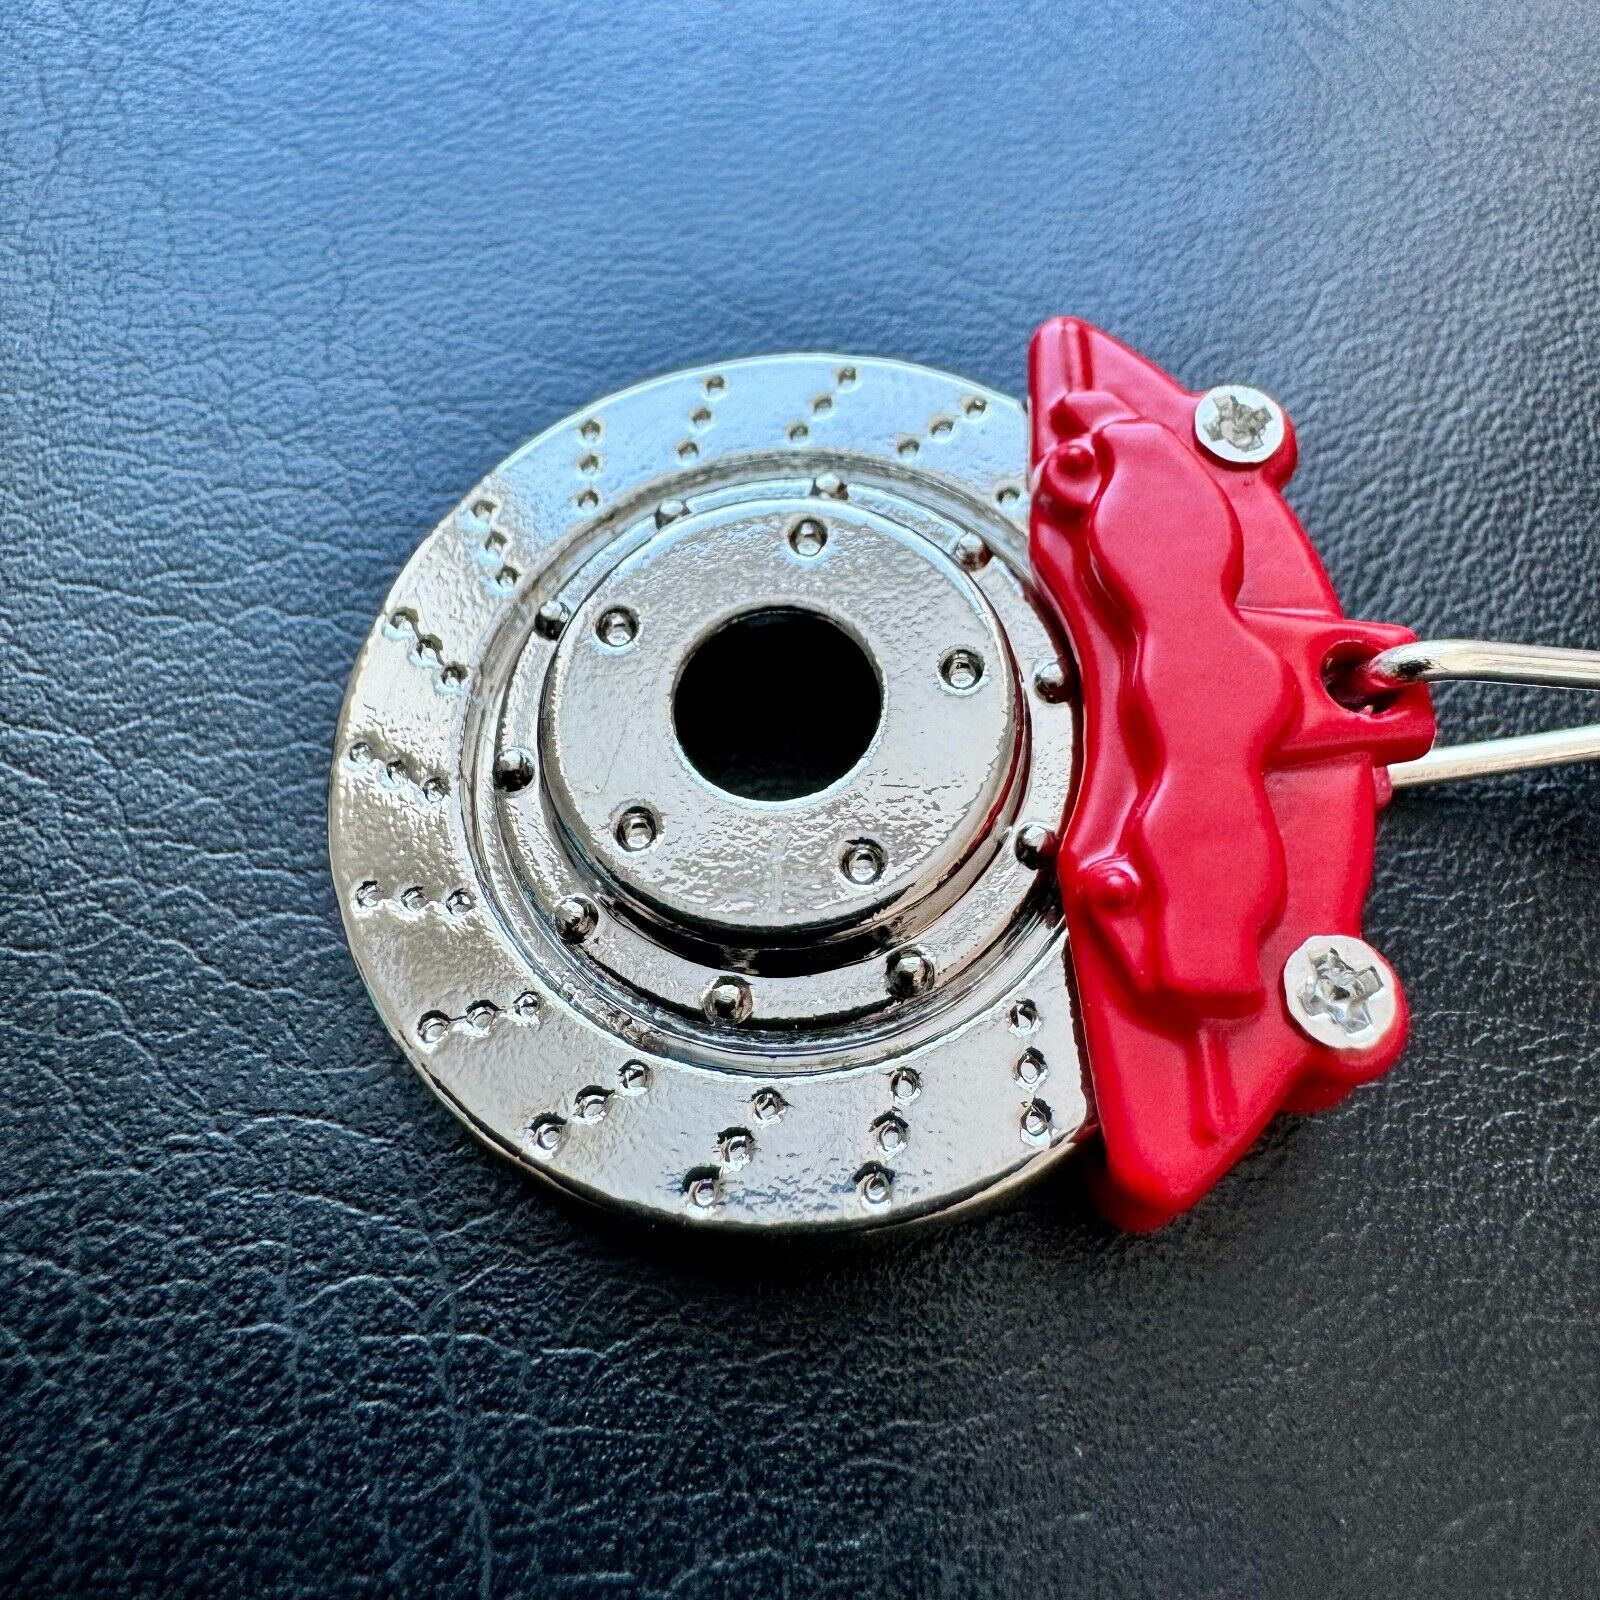 Fun Brake Rotor & Caliper Keychain - Red Caliper, Great Gift, Car Enthusiast